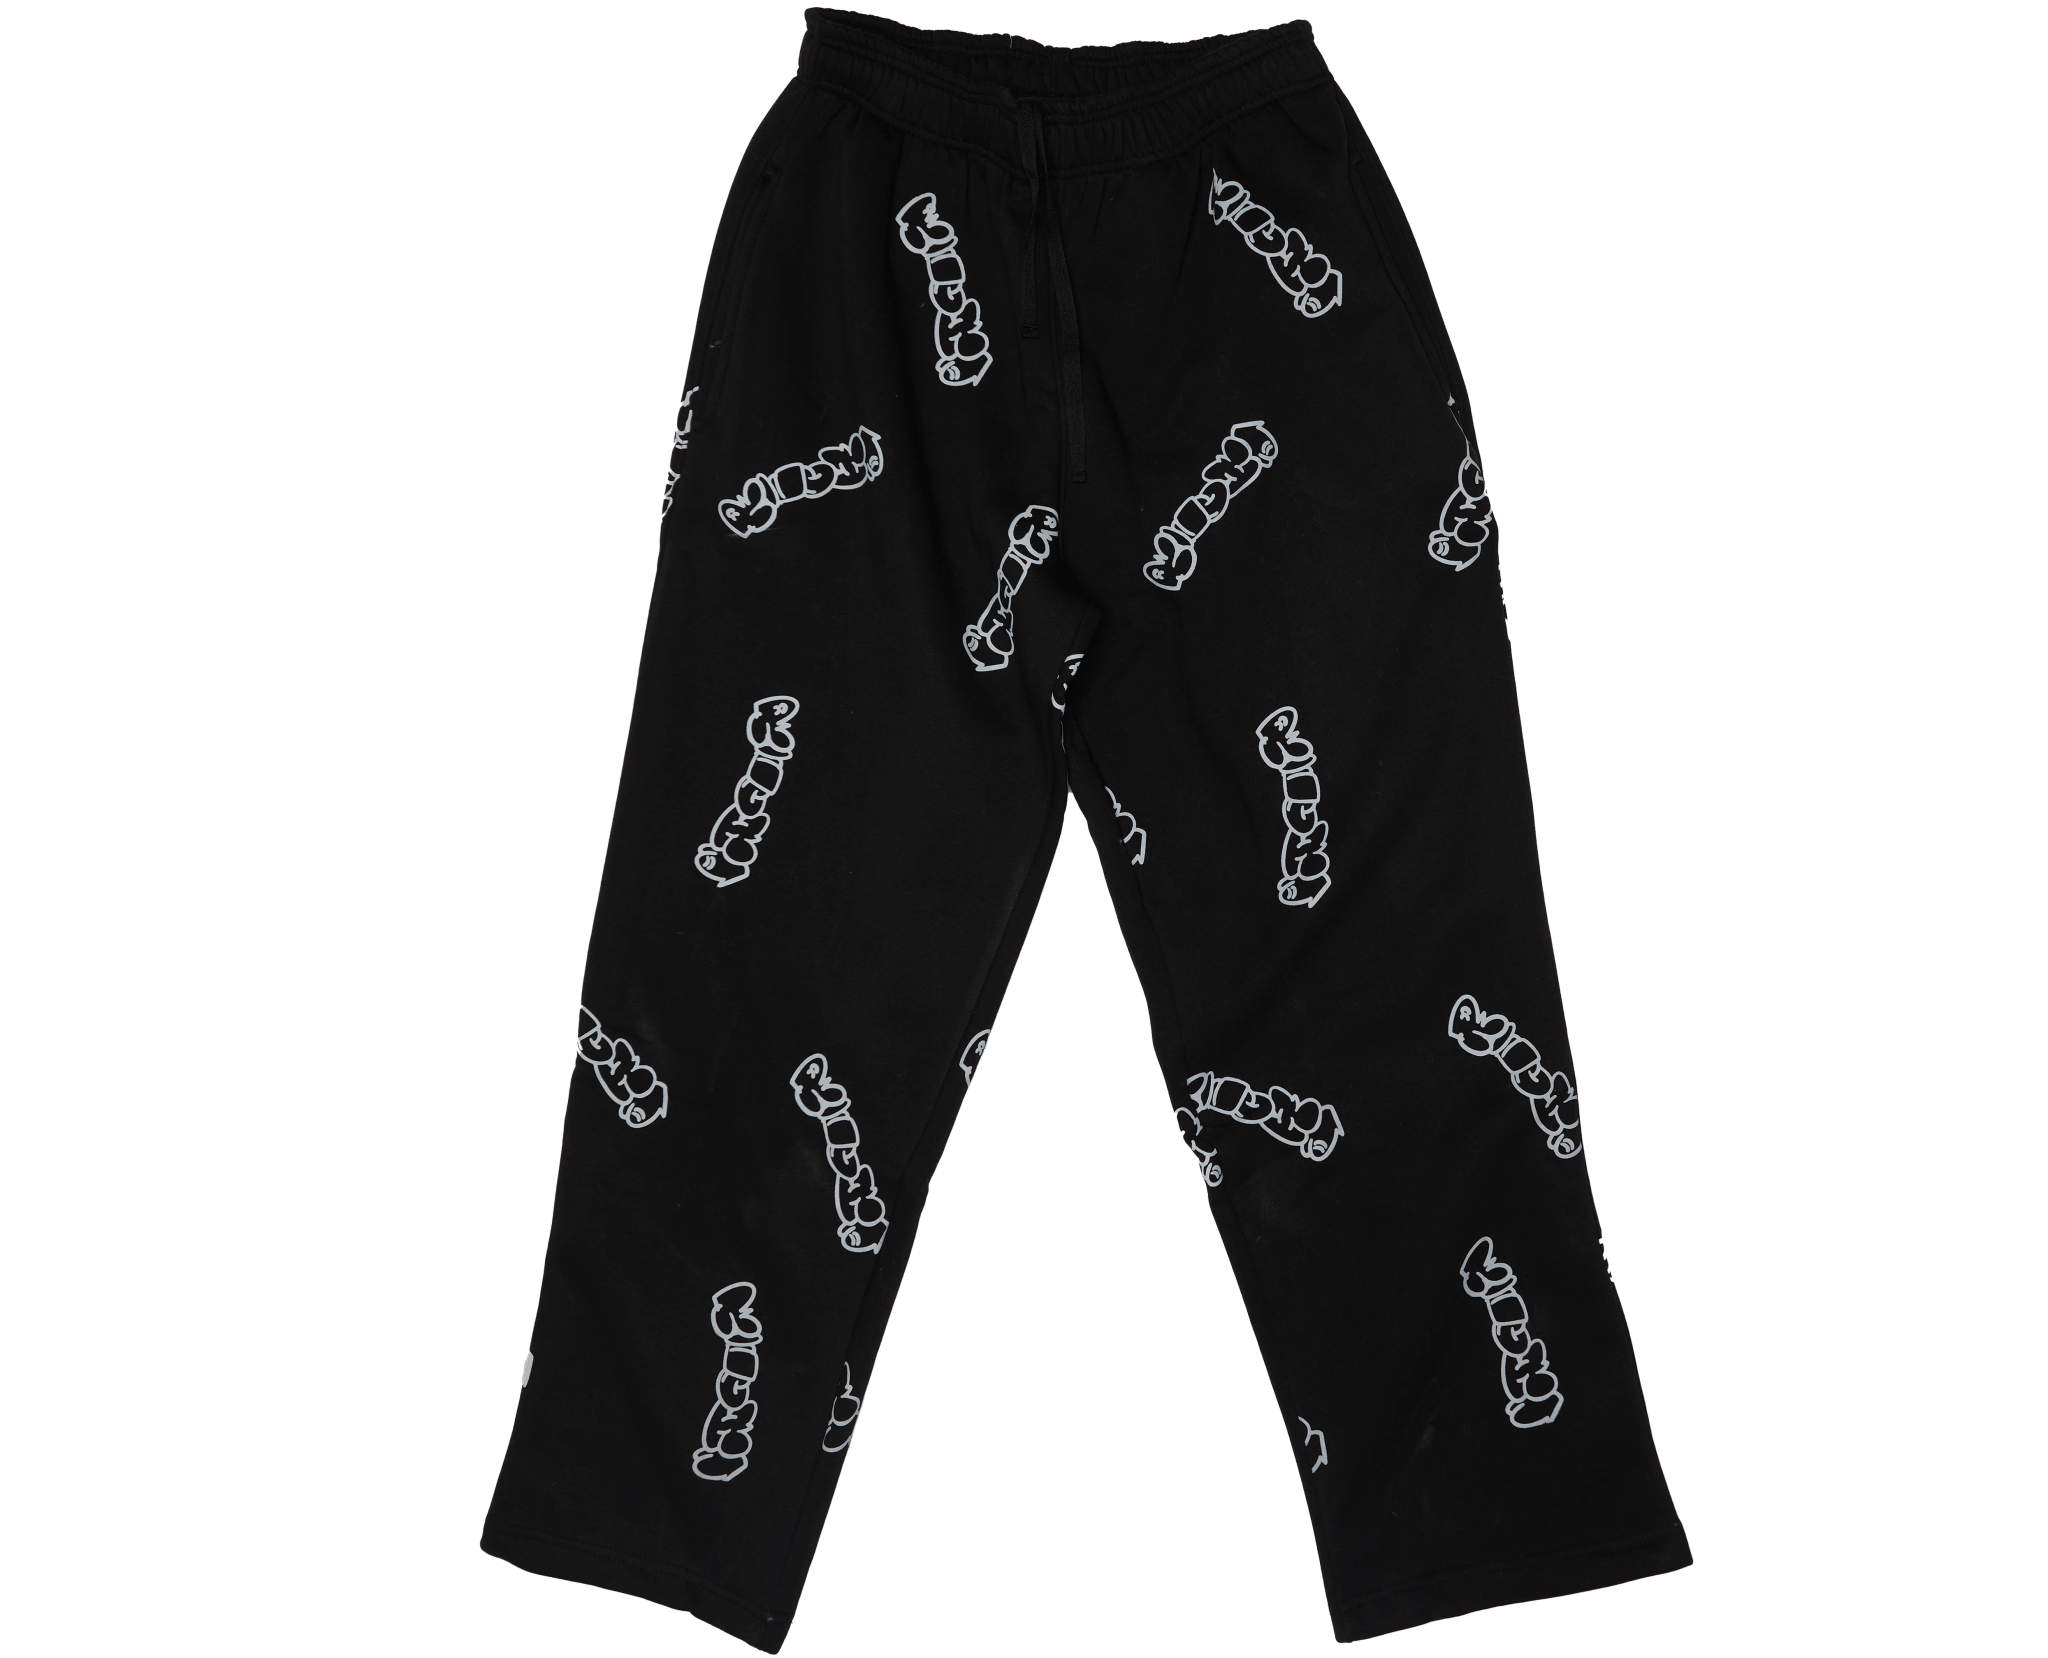 Patterned Black Richa Sweatpants - Richa UAE